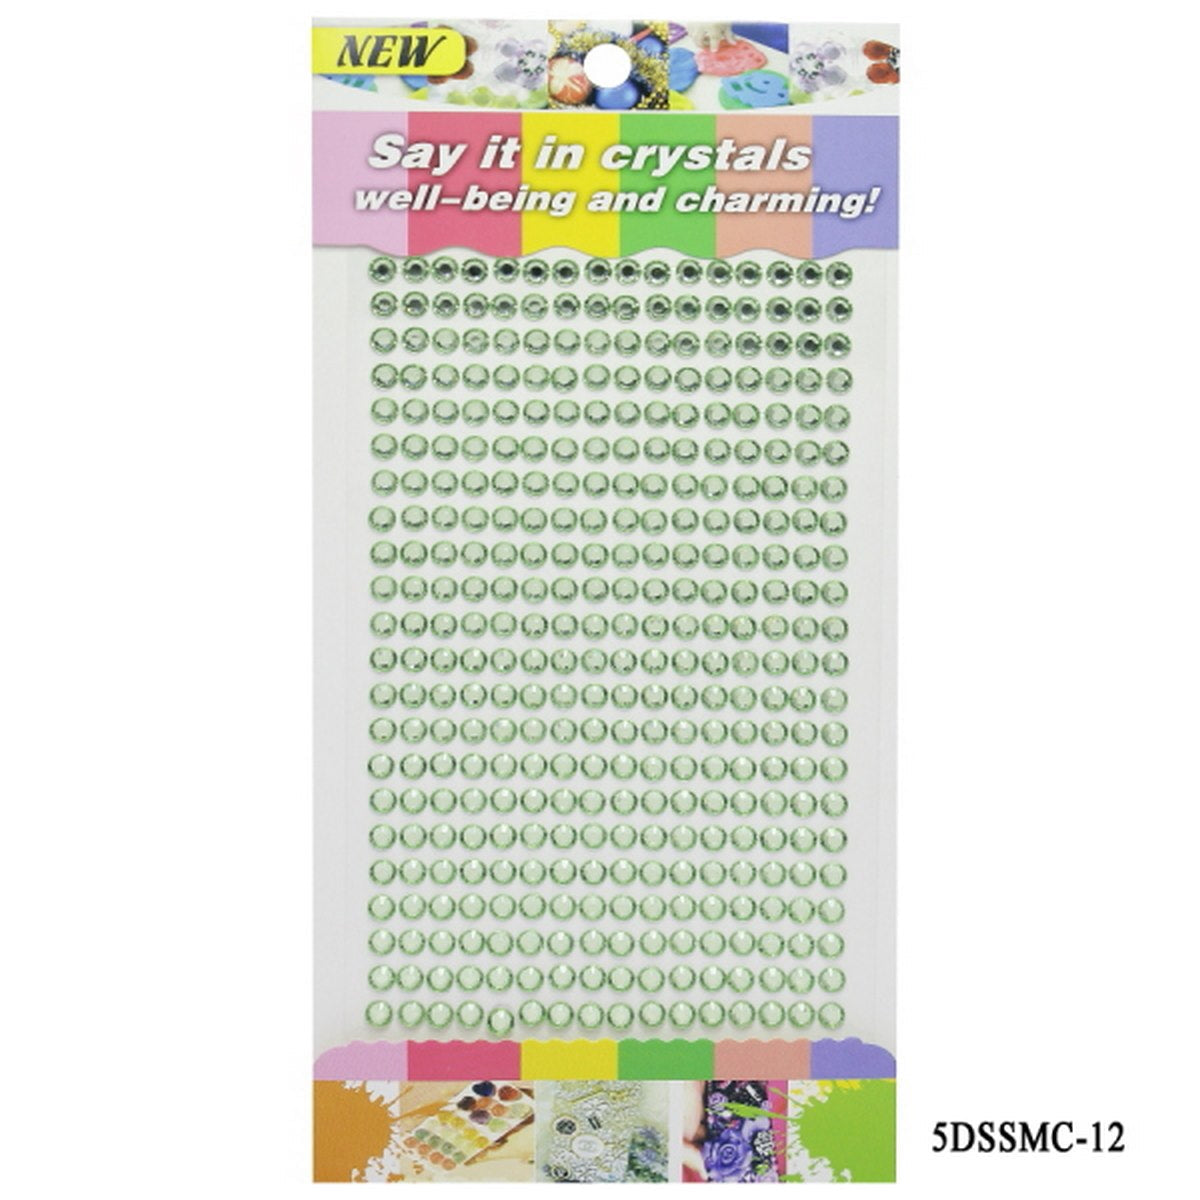 jags-mumbai Pearl & Diamond Stickers School project stickers diamond pattern- Light green